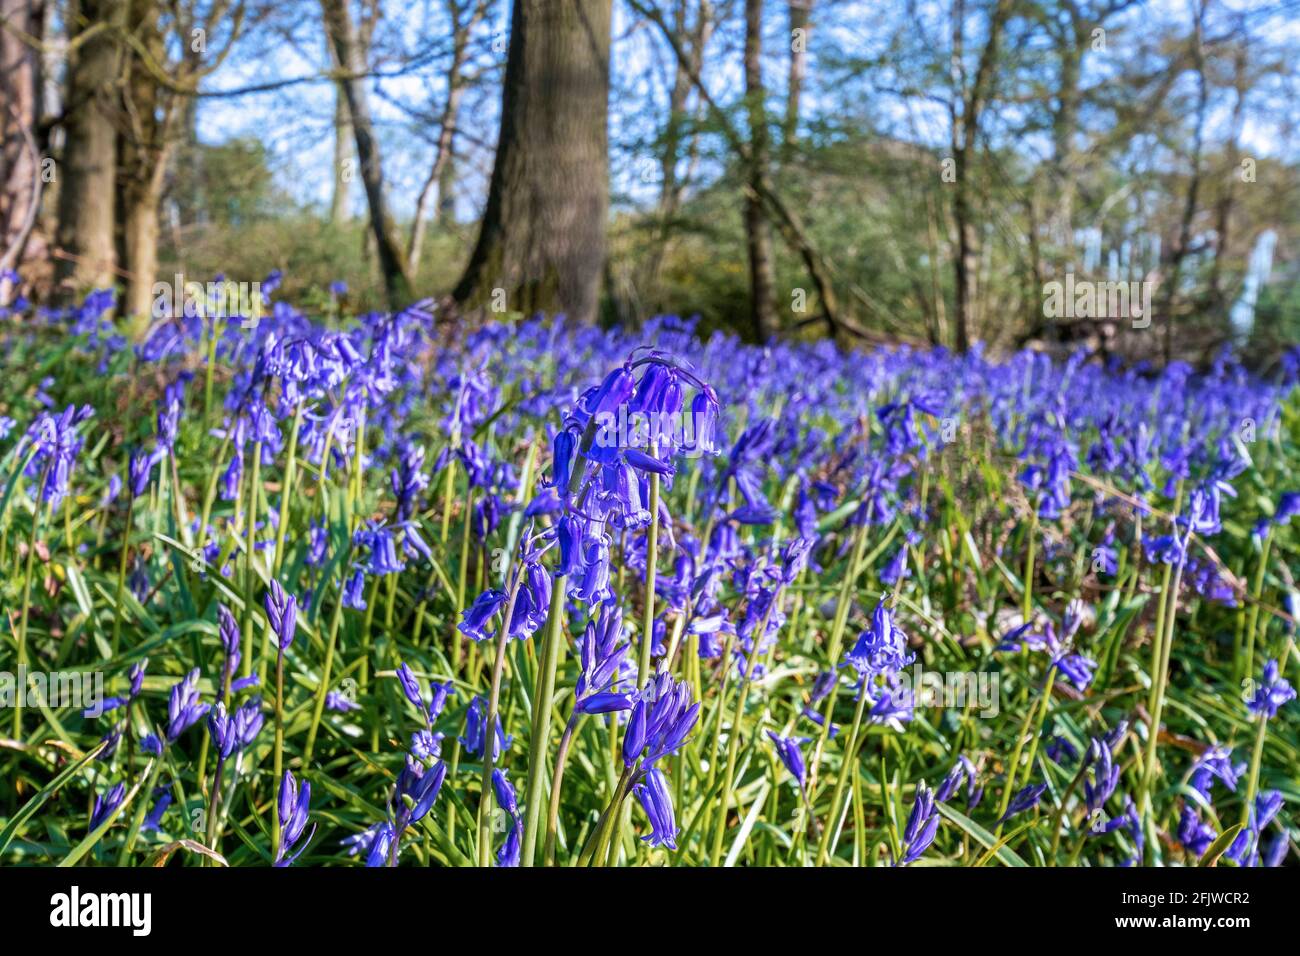 Native english bluebells (Hyacinthoides non-scripta) flowering in woodland at Binfield Heath, Oxfordshire, England, UK Stock Photo